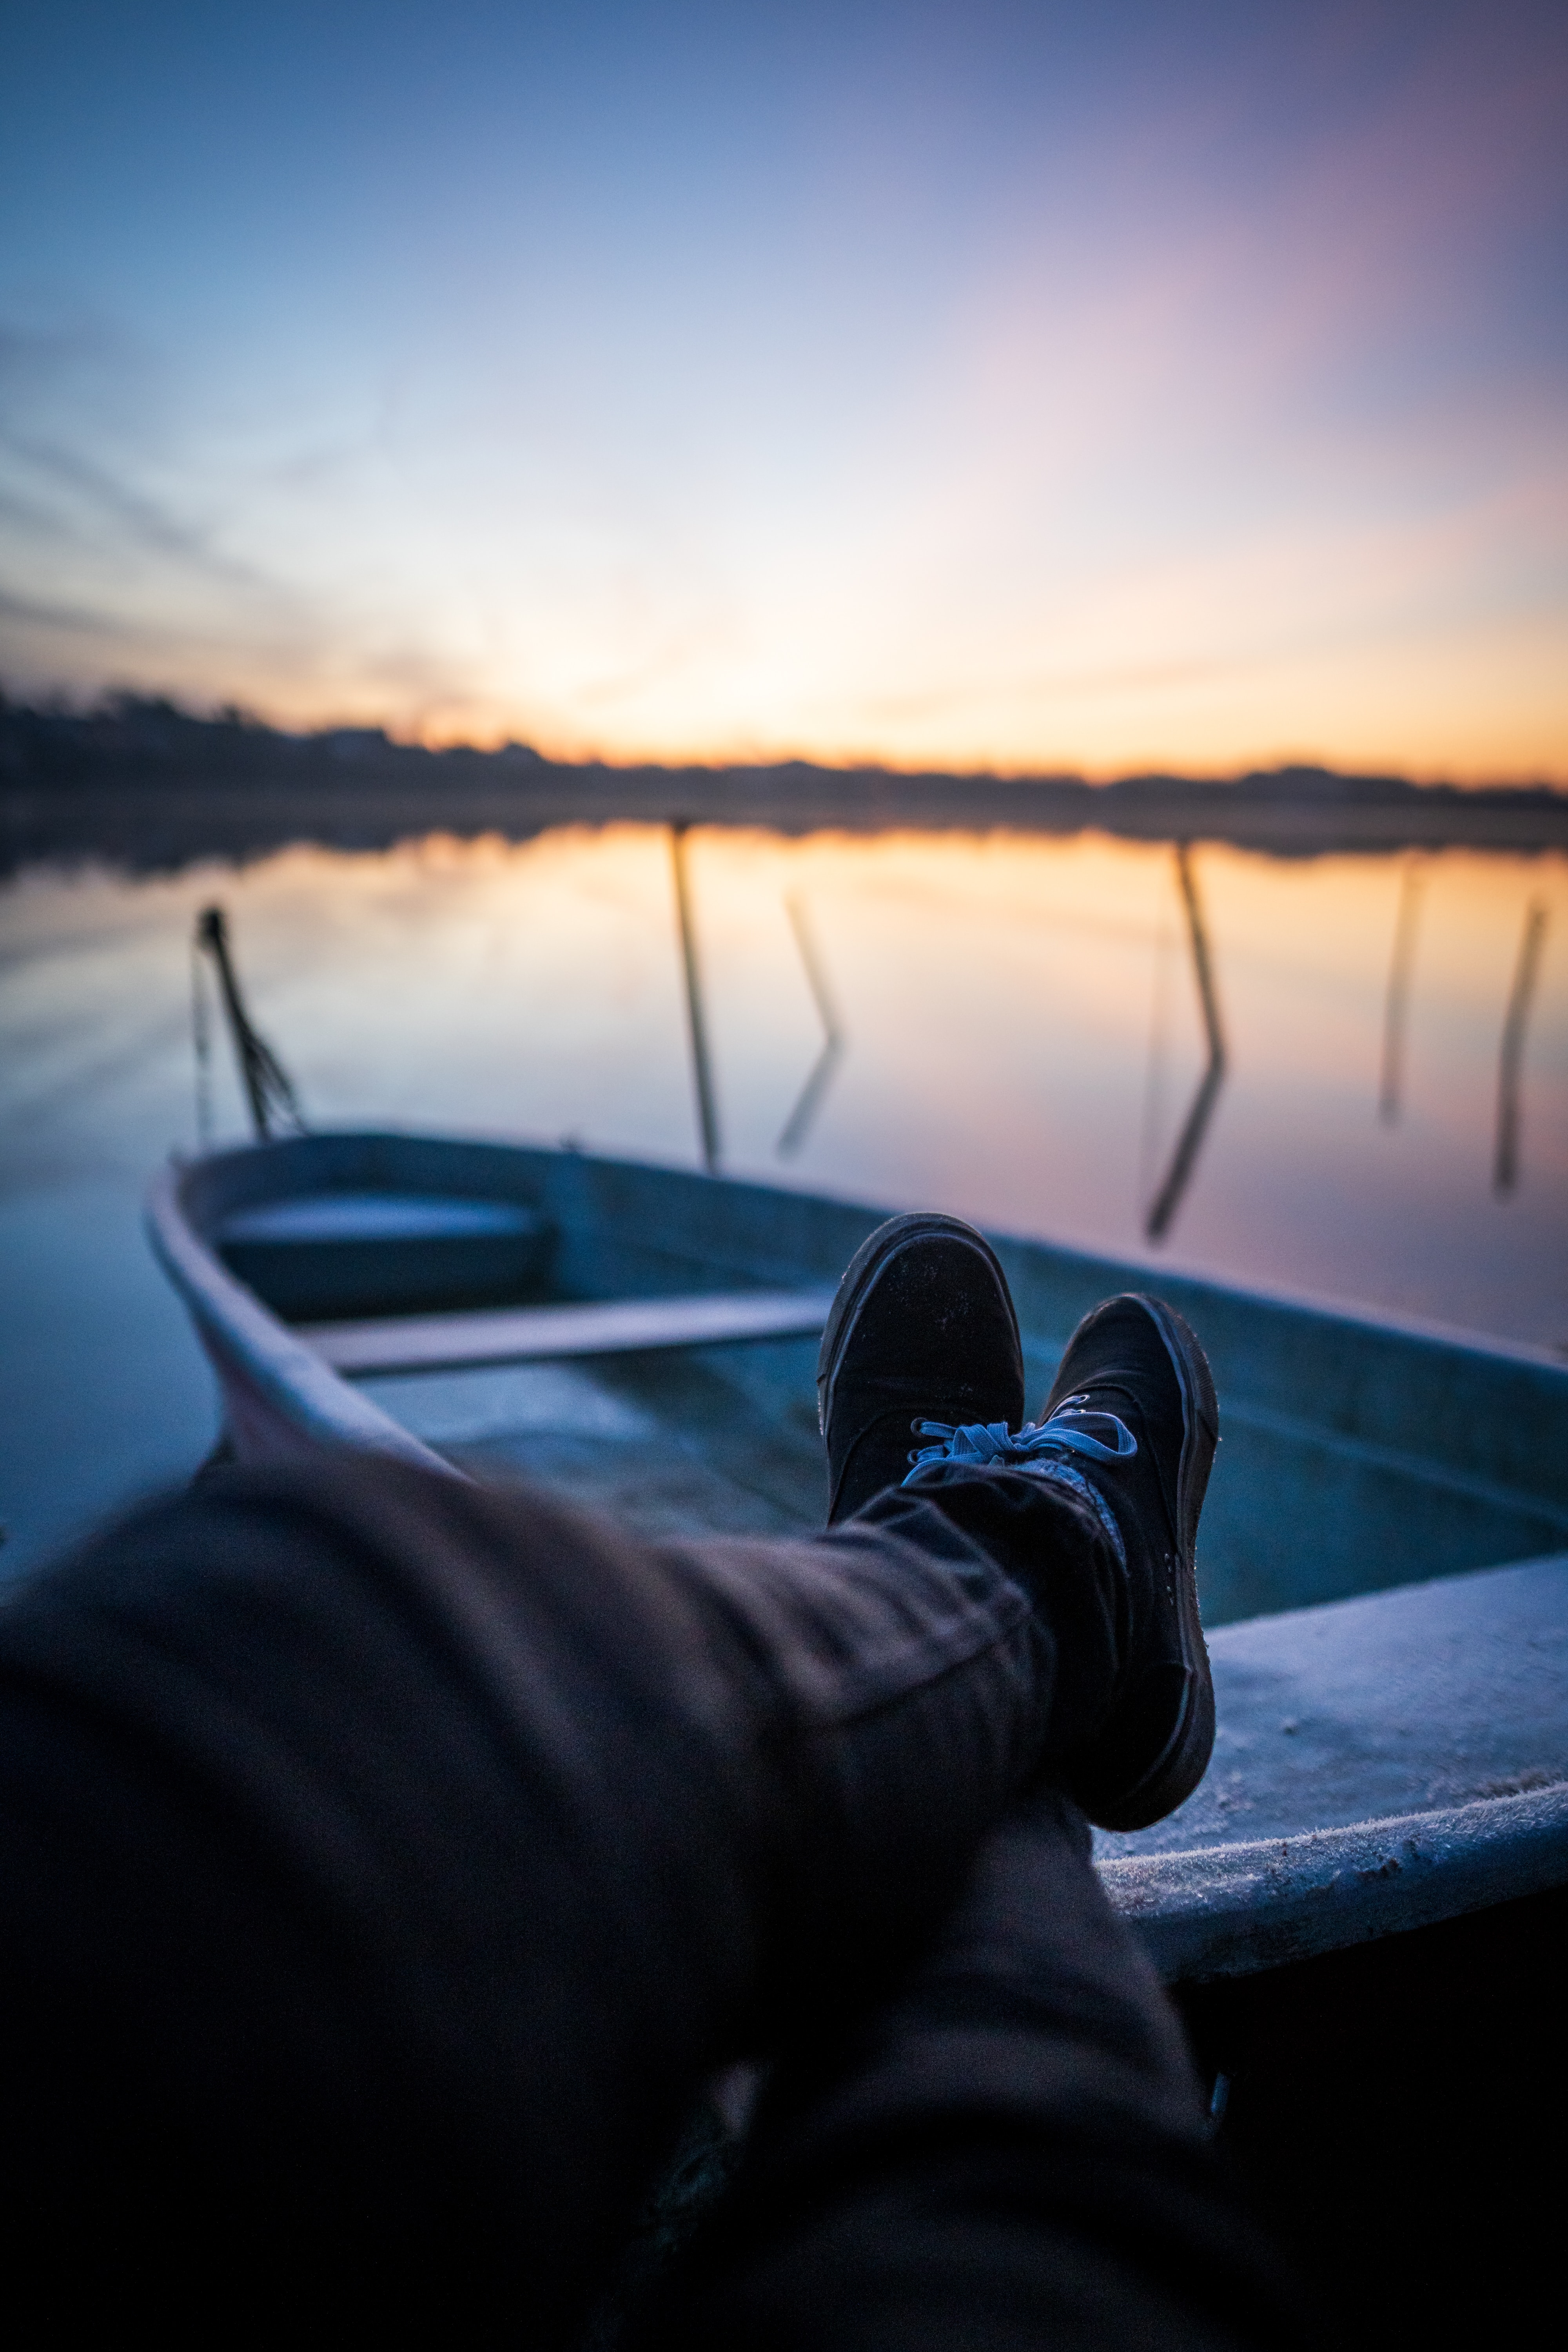 Full HD twilight, lake, miscellanea, miscellaneous, legs, dusk, relaxation, rest, boat